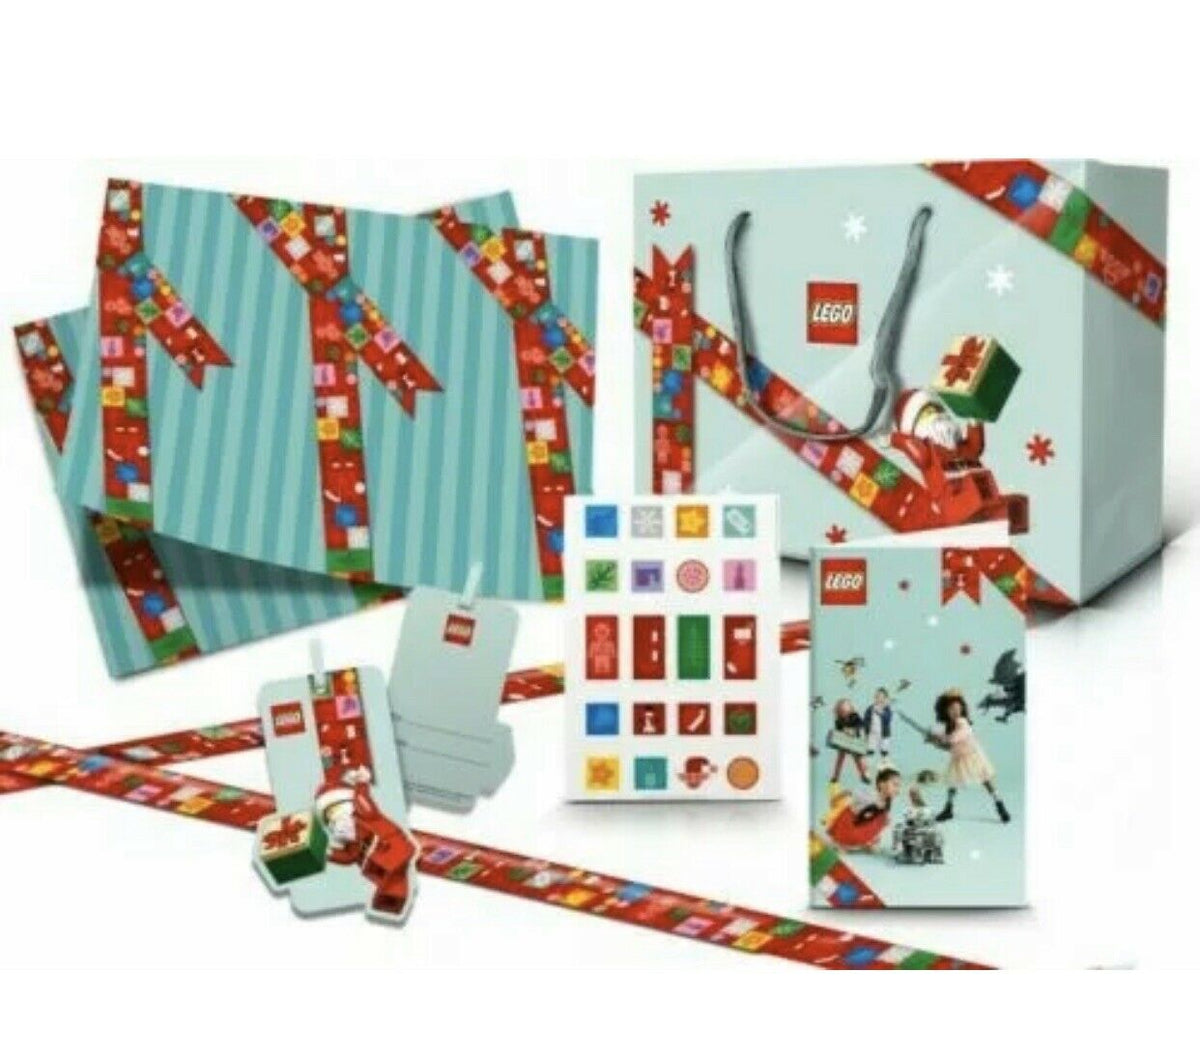 Lego Vip Gifting Wrapping Paper Bag Ribbon Tag Sticker Christmas Card Set